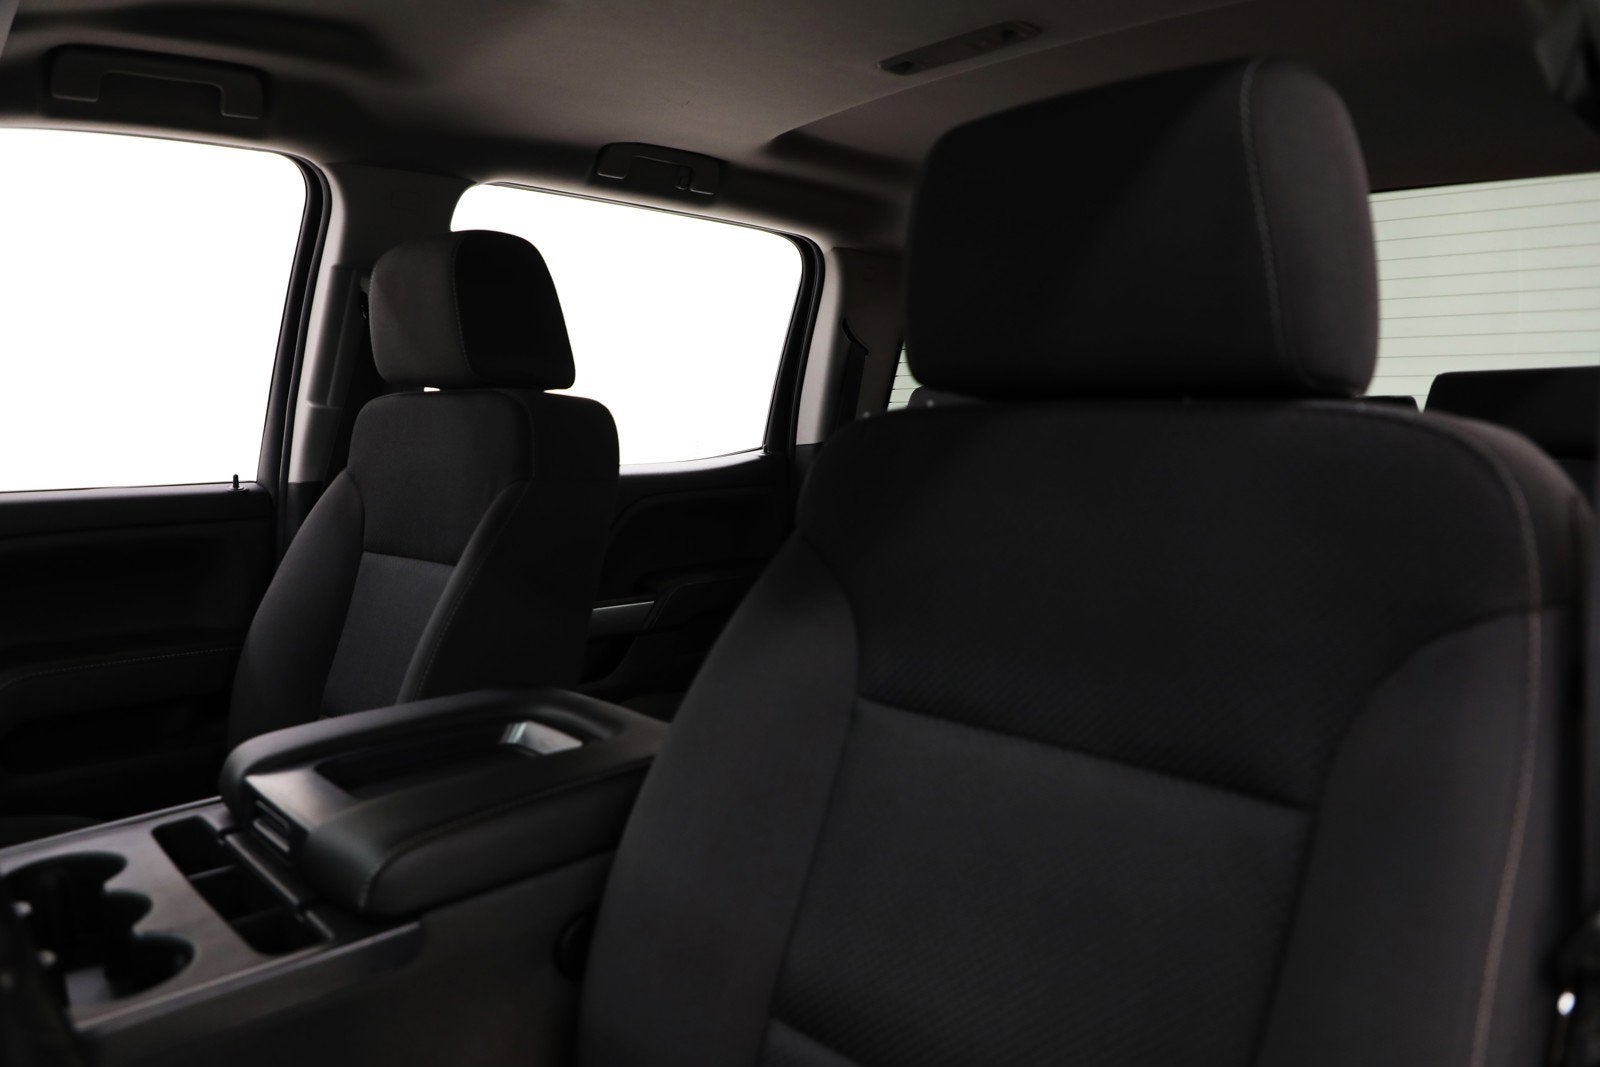 2018 Chevrolet Silverado 1500 Crew Cab LT 4WD Heated Seats All Star Edition 5.3L V8 Remote Start Rear Camera Assist Steps Cruise